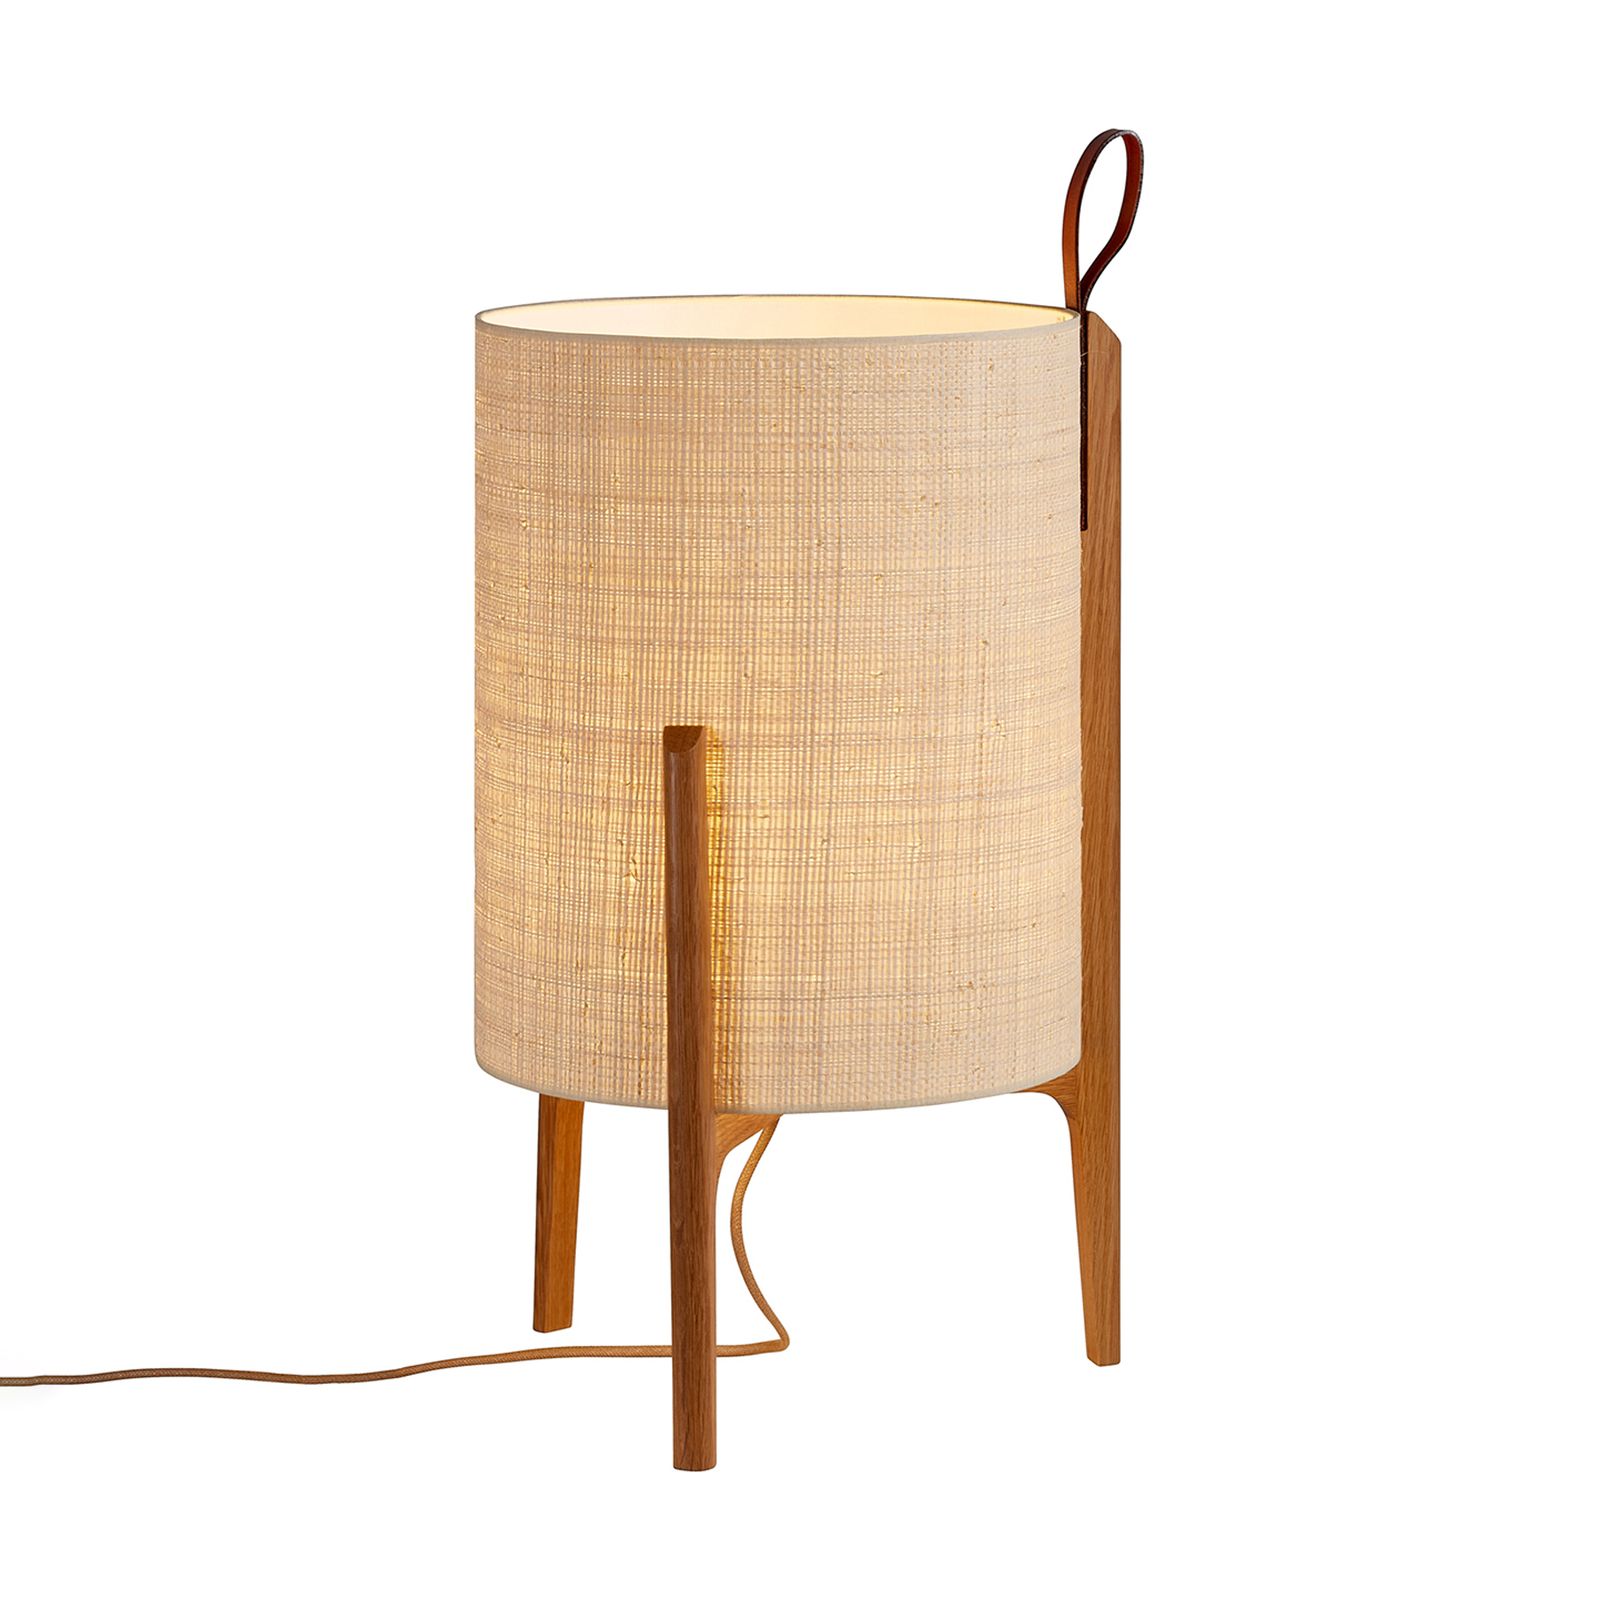 Greta table lamp, natural fibre/oak, 44 cm high